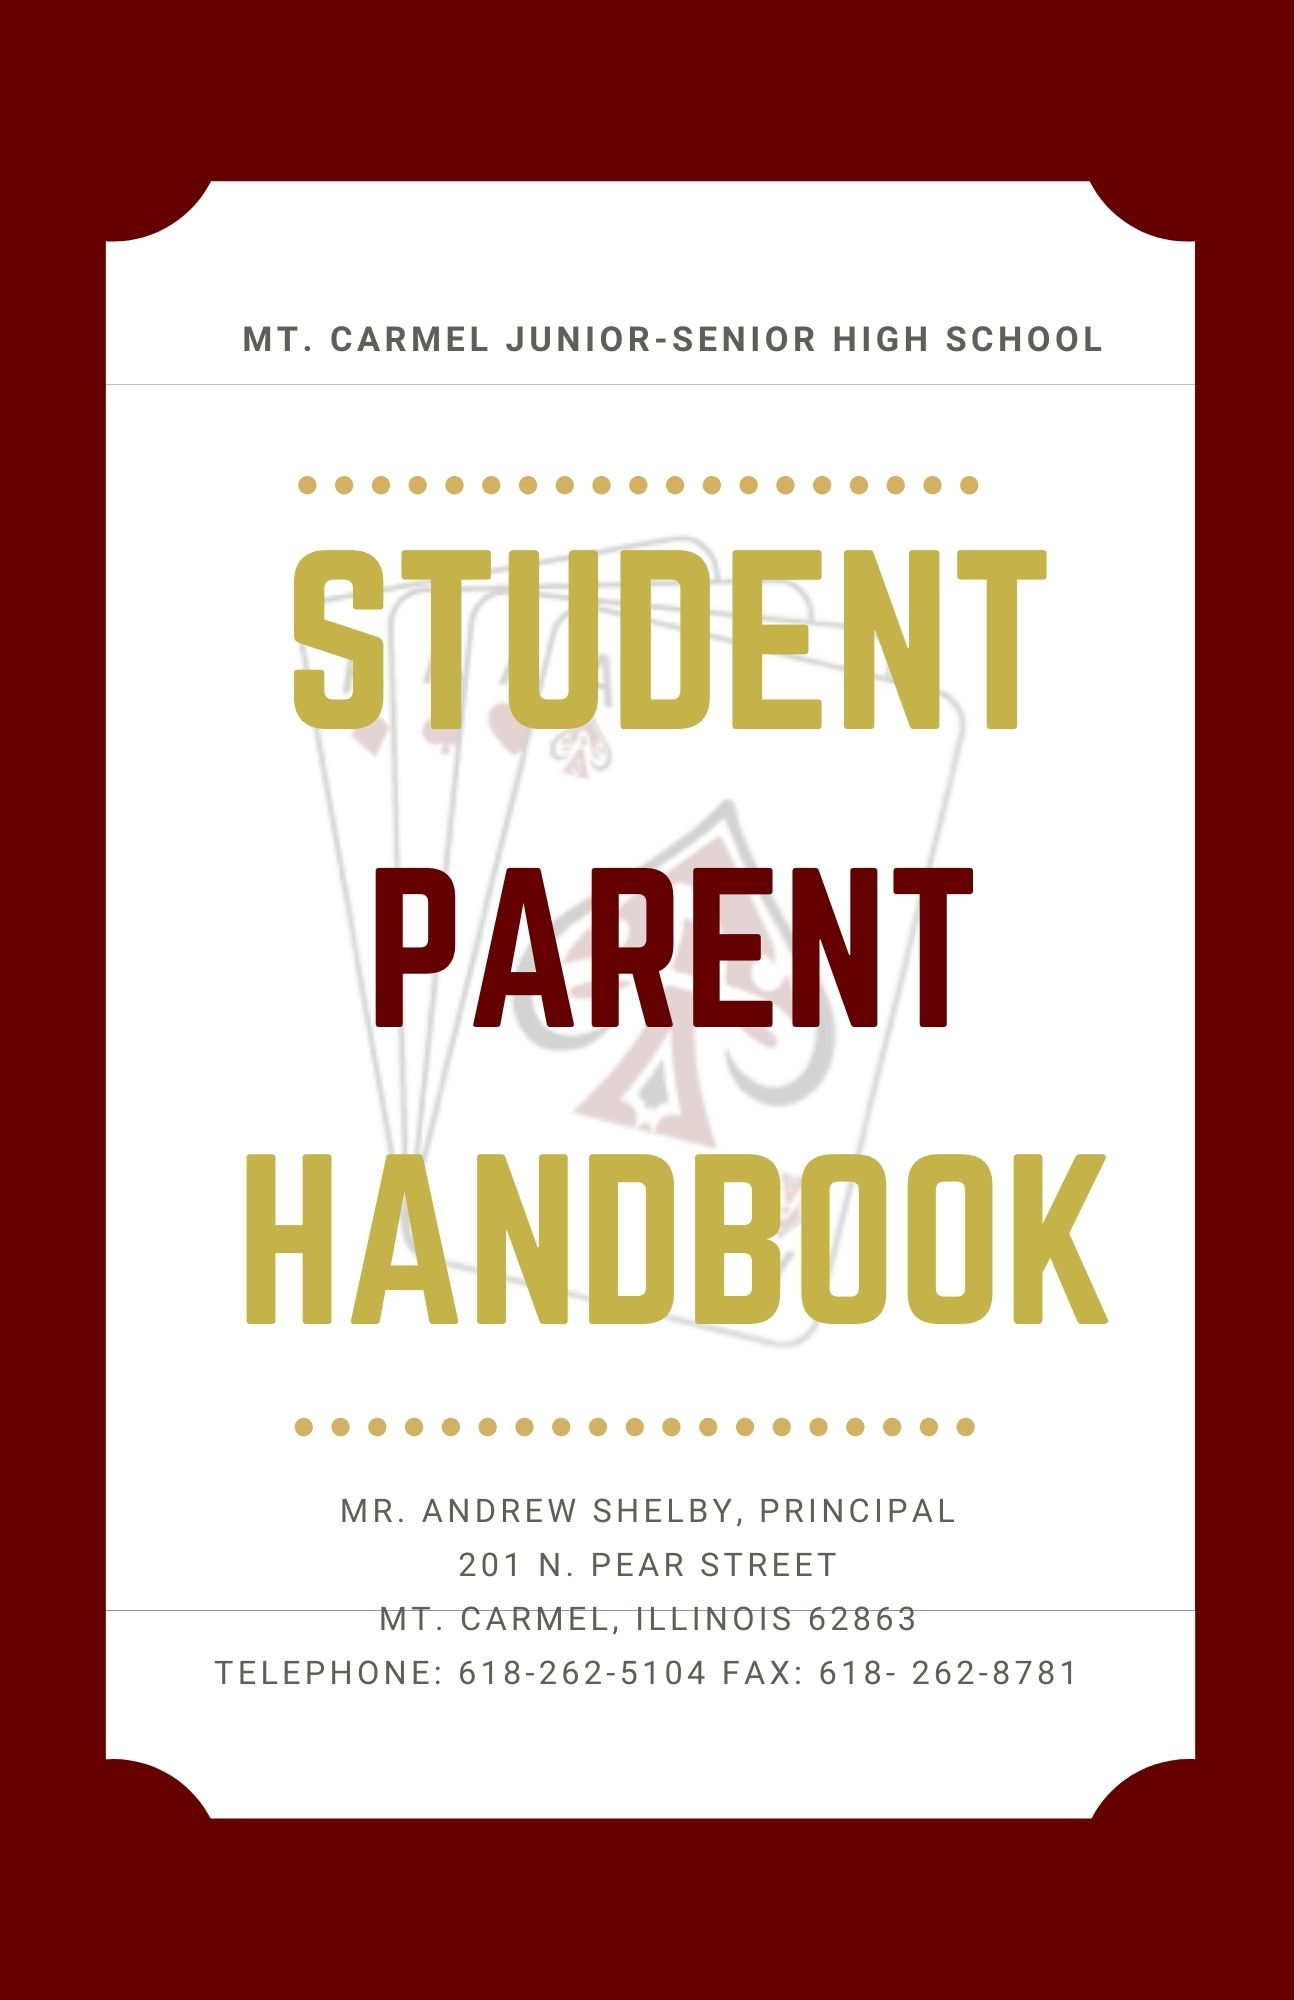 MCJSHS Parent Student Handbook